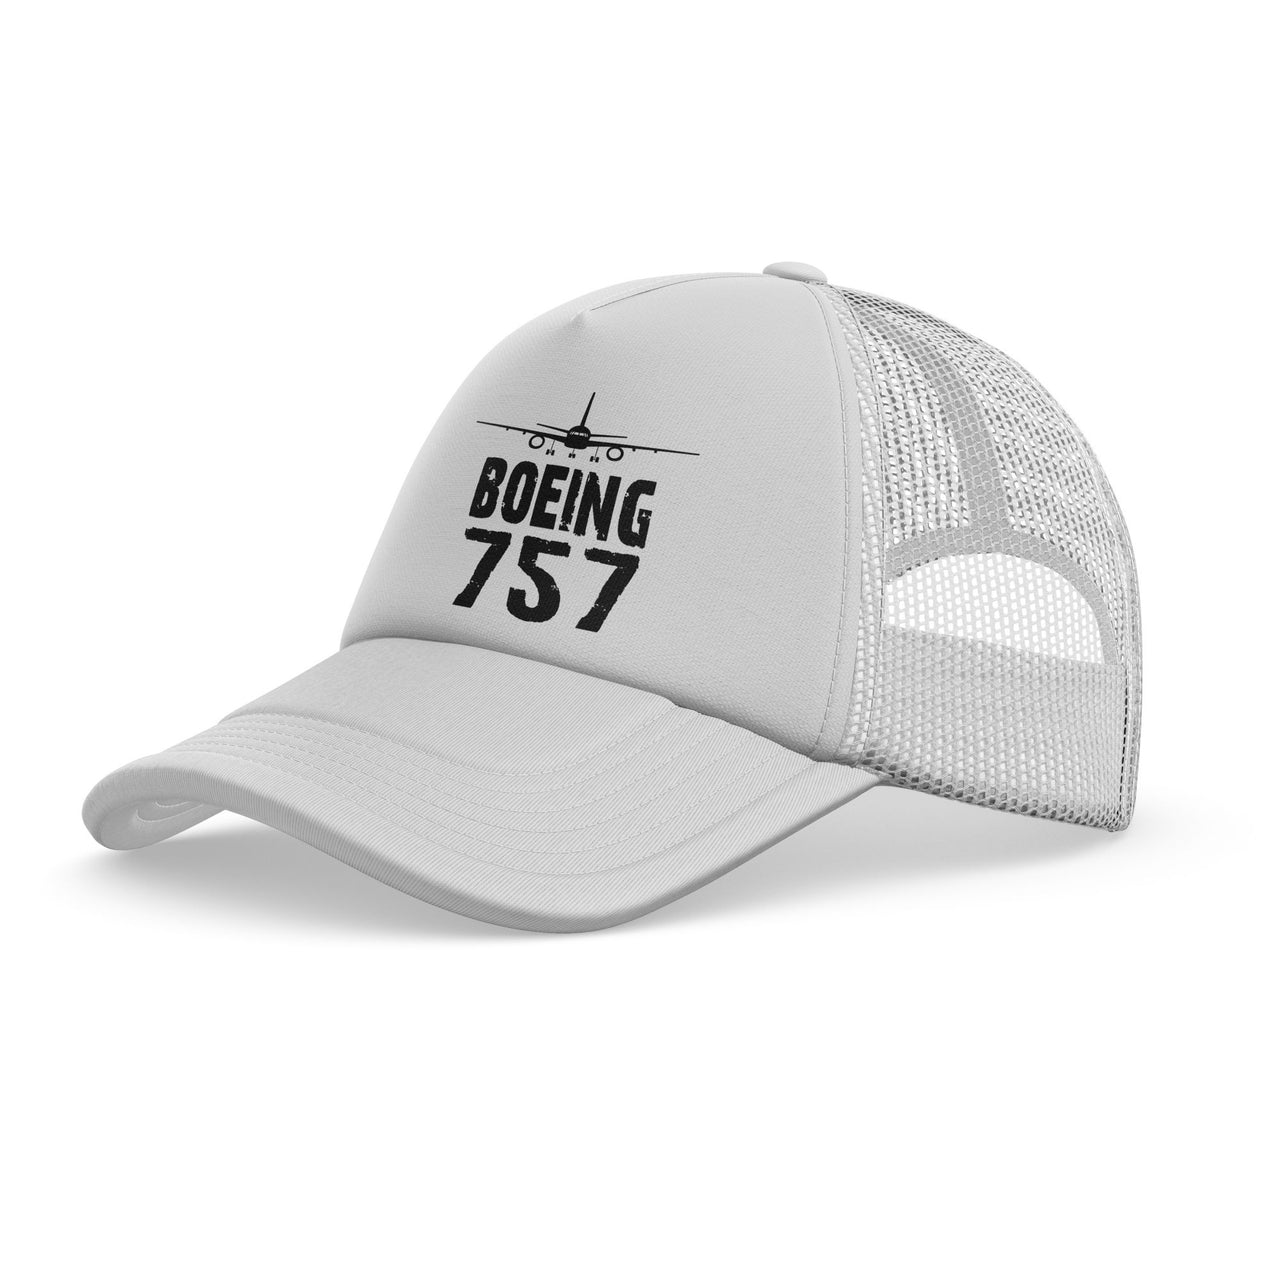 Boeing 757 & Plane Designed Trucker Caps & Hats